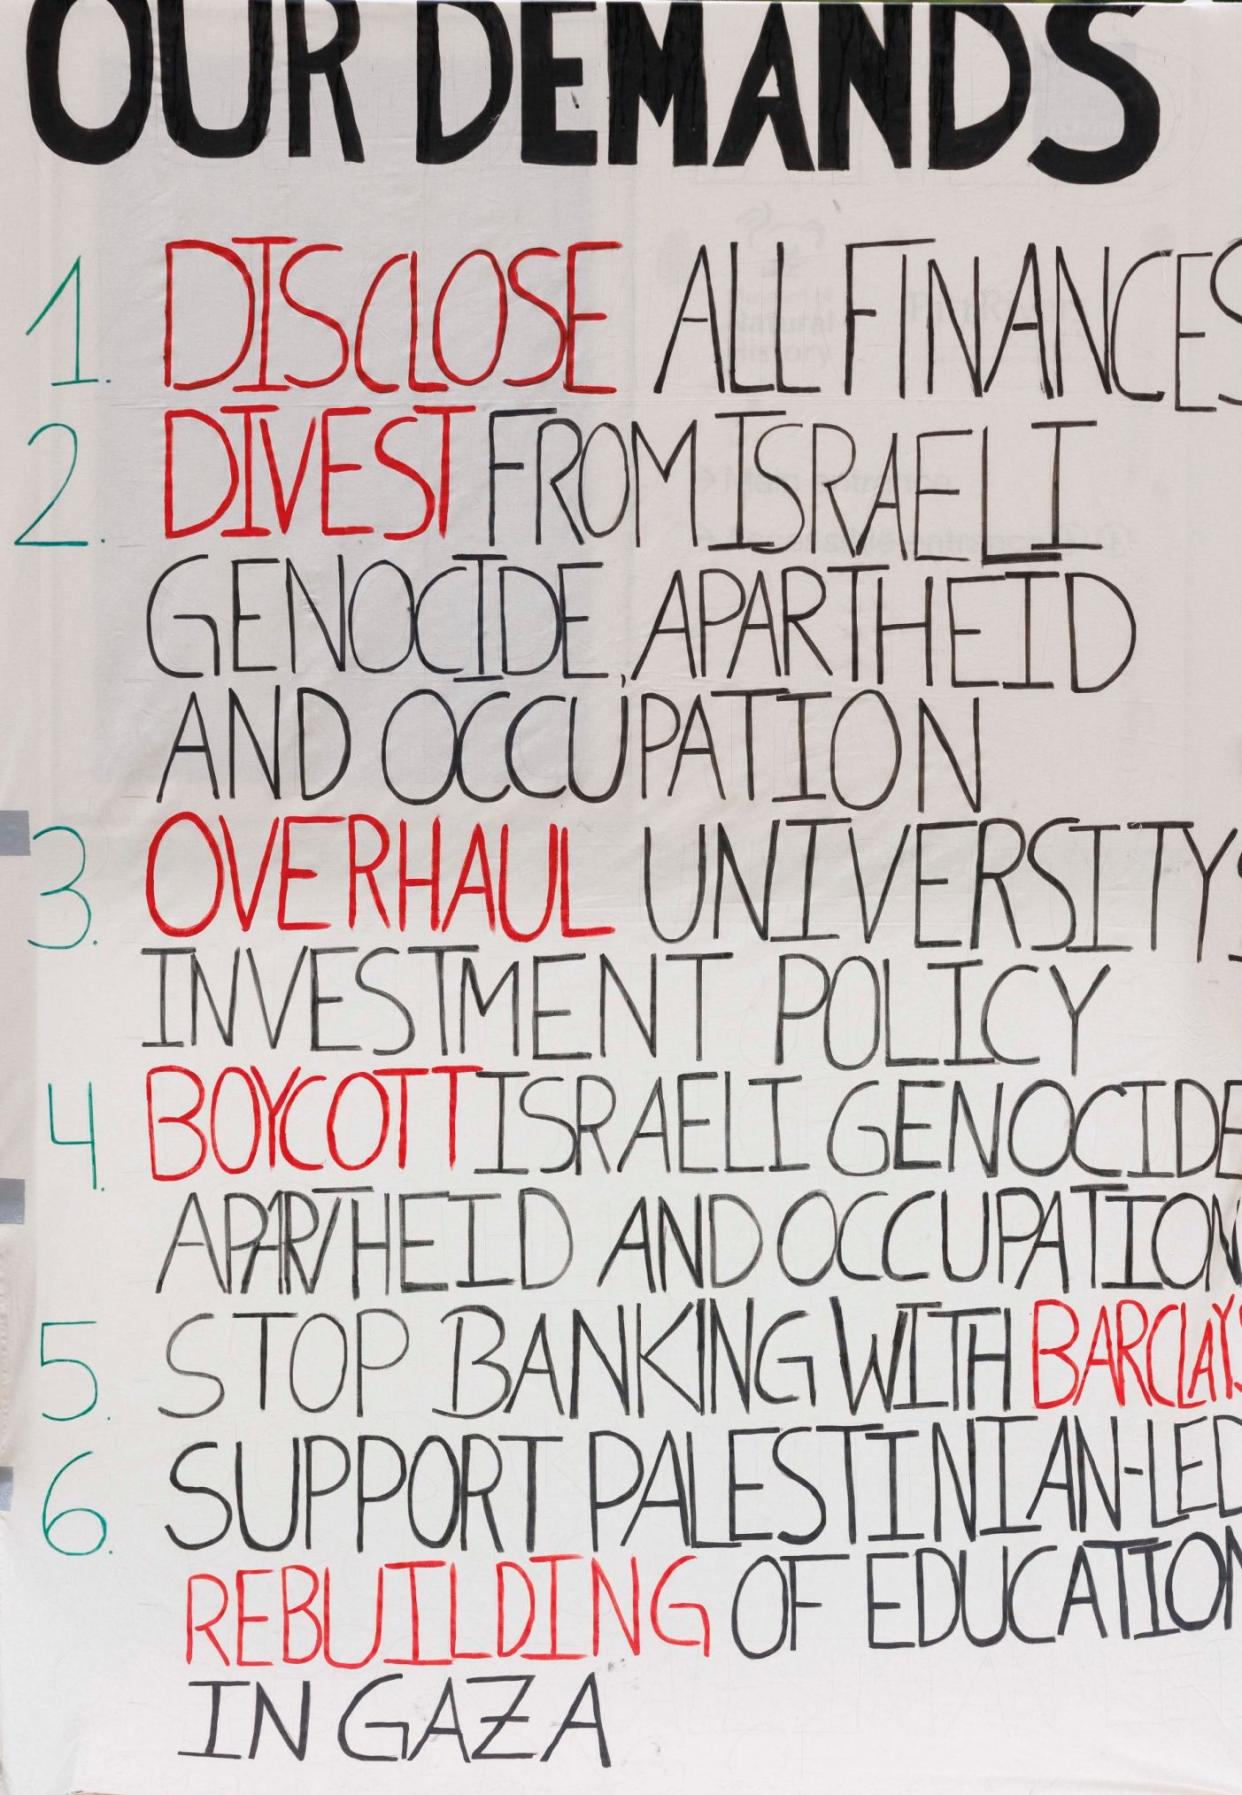 A list of demands at the Gaza Solidarity Encampment at Oxford University